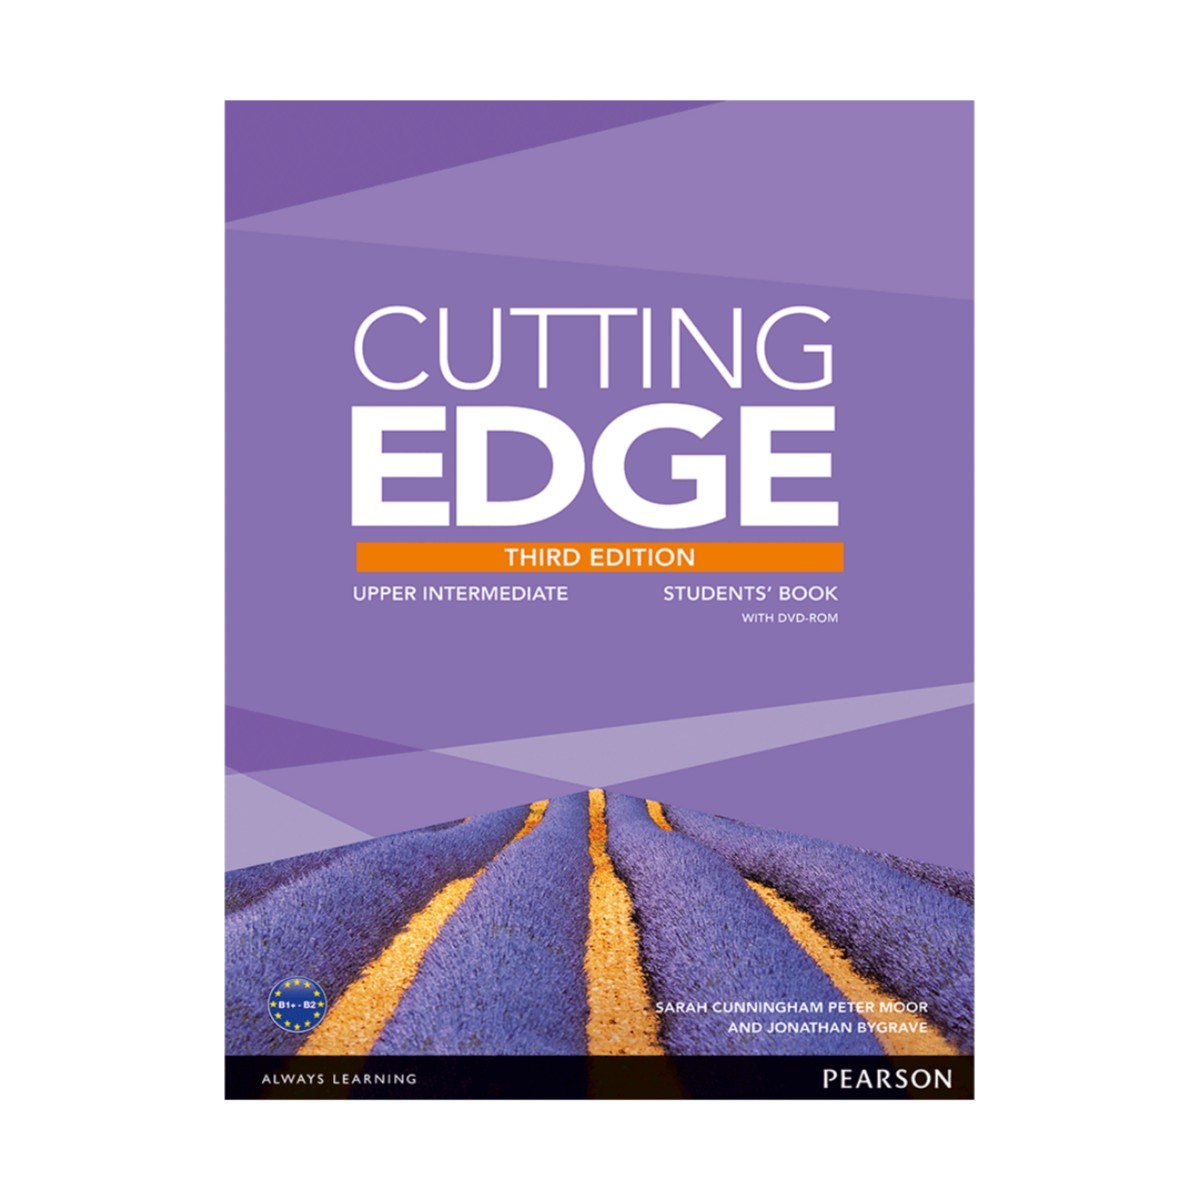 کتاب Cutting Edge upper-intermediate 3rd اثر جمعی از نویسندگان انتشارات Pearson 